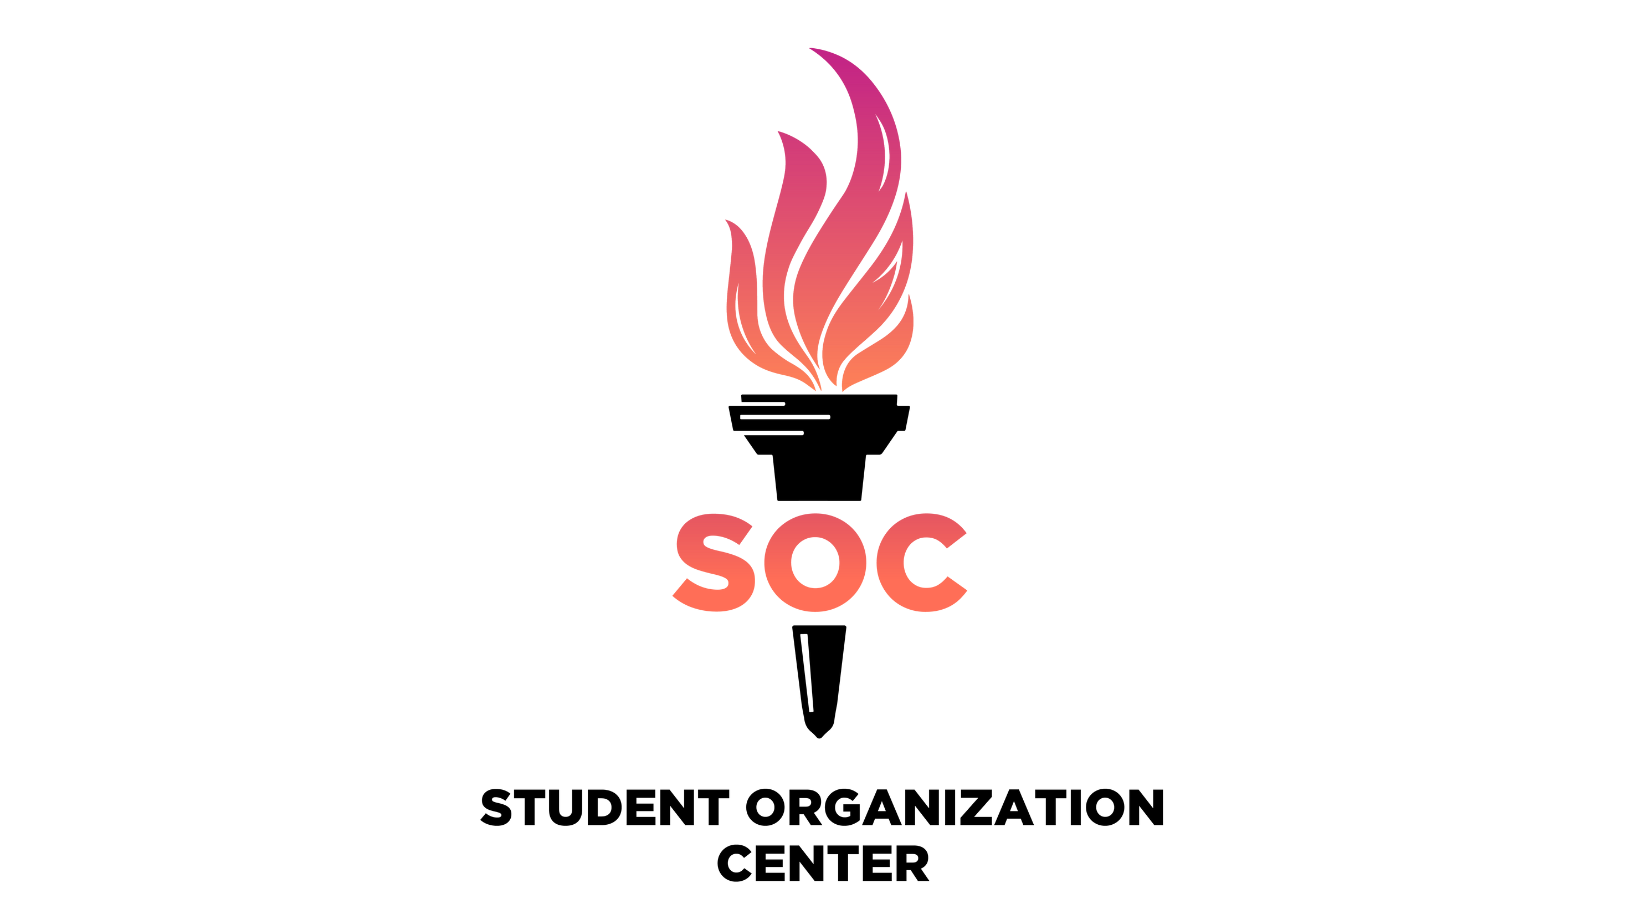 SOC Student Organization Center